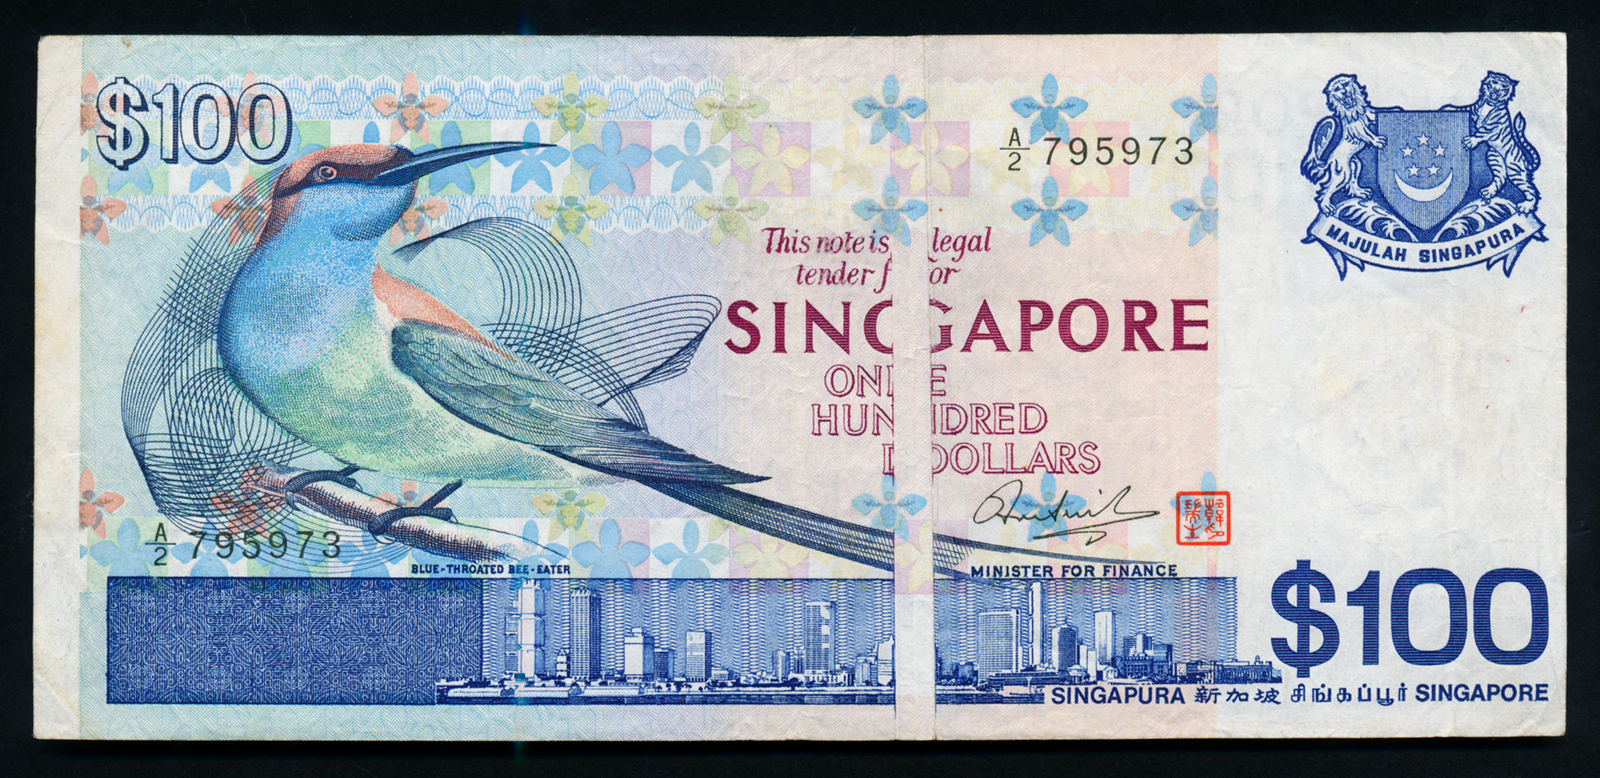 Singapore Bird 1976 $100 Error Note A/2 795973 VF Minor Foxing 